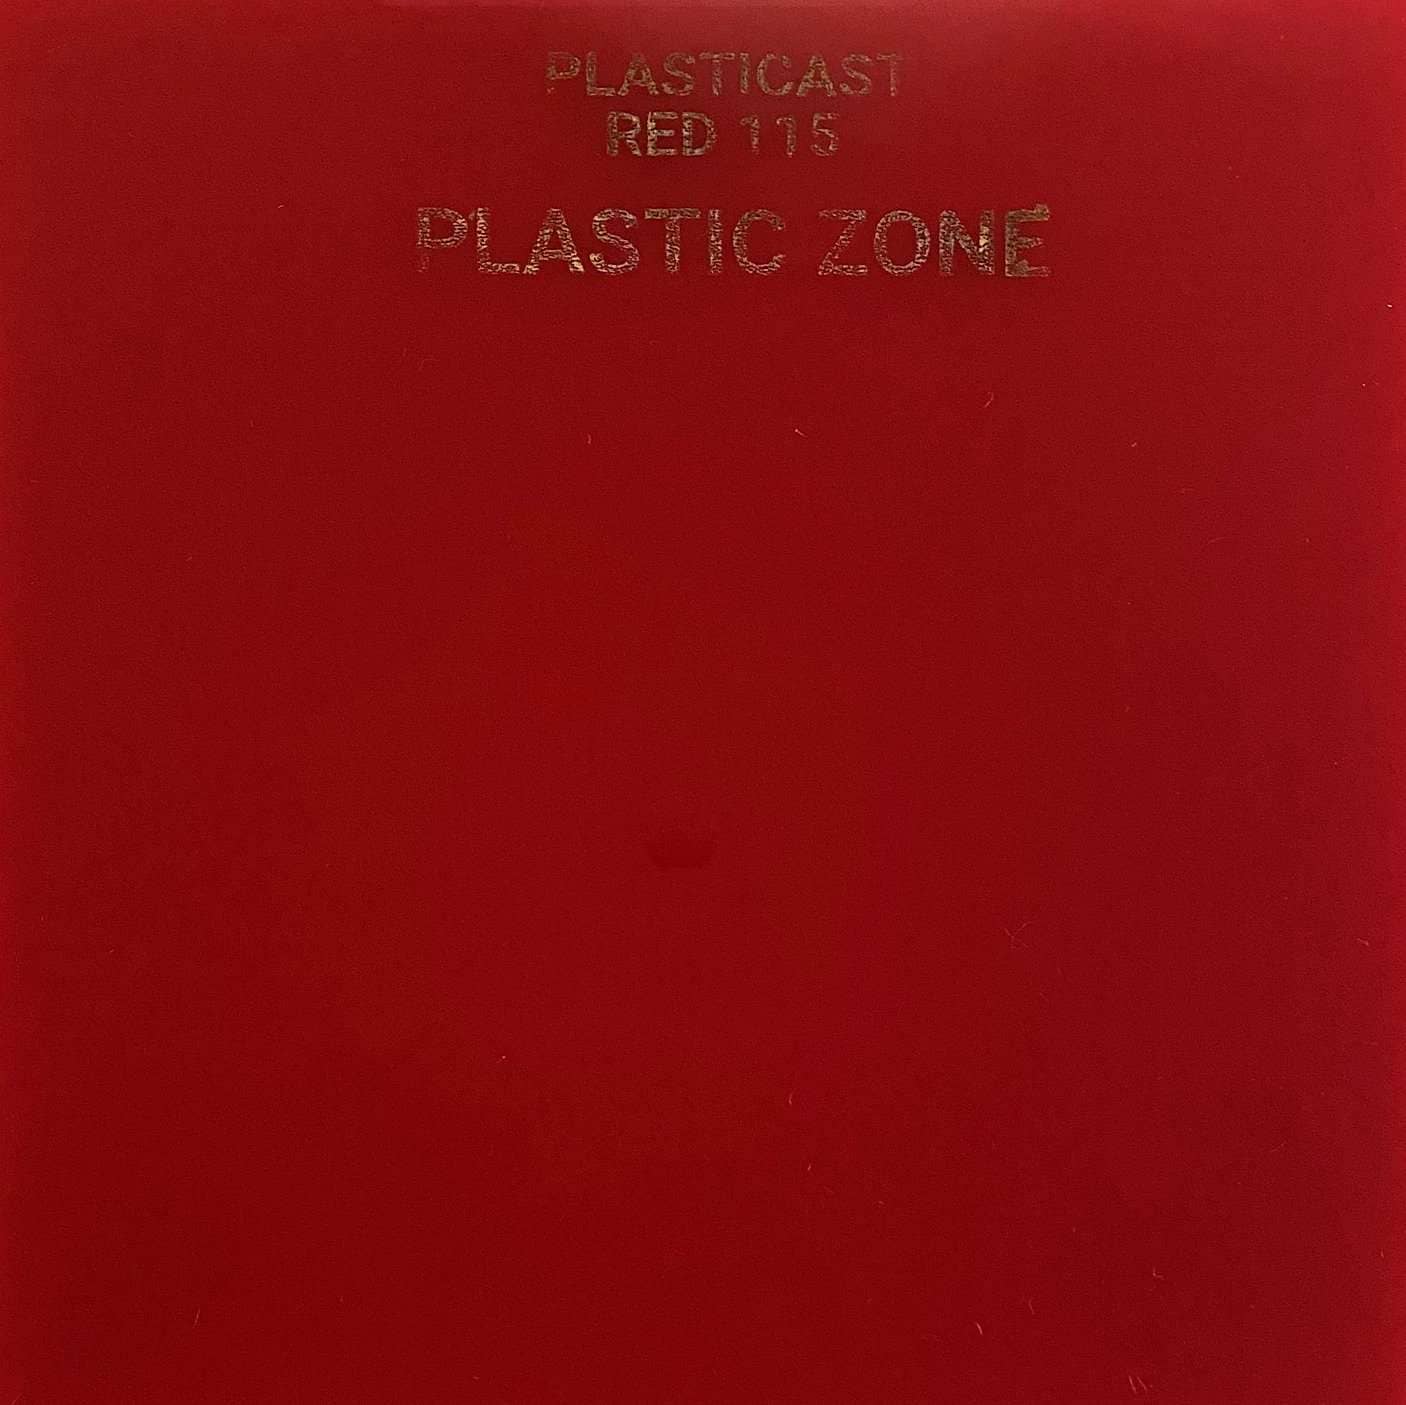 Red acrylic sheet 115